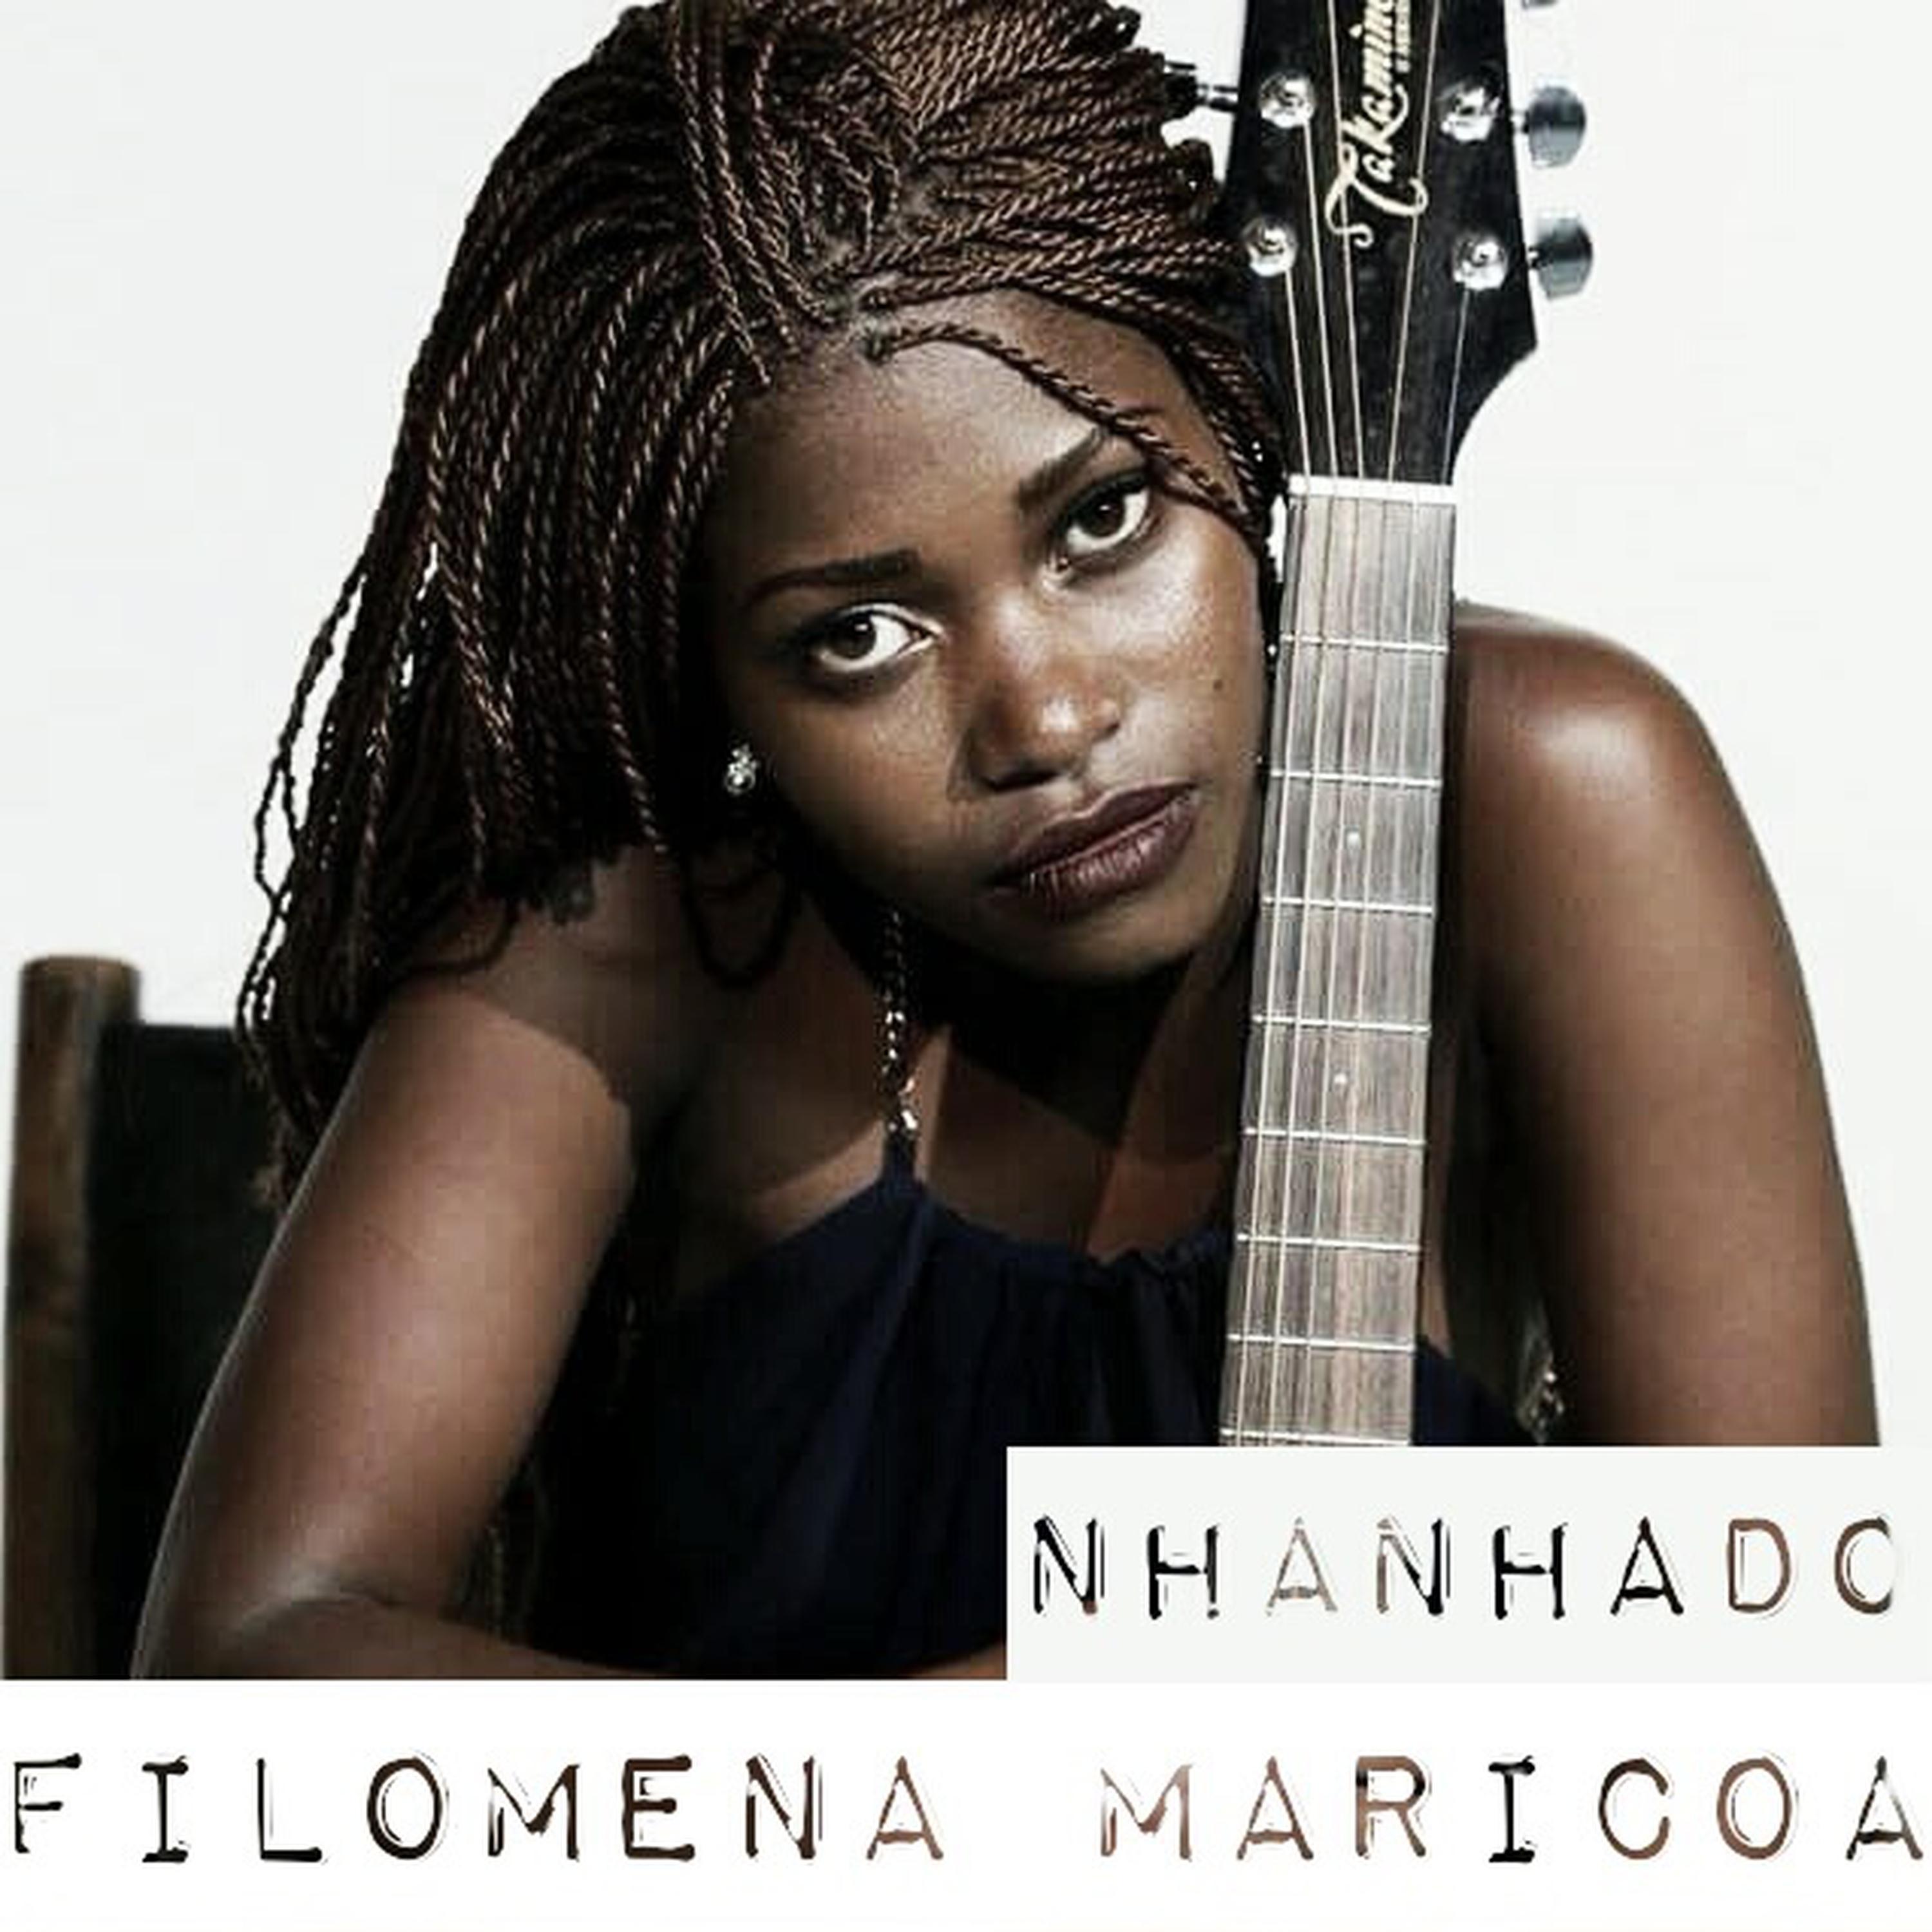 Filomena Maricoa - Nhanhado